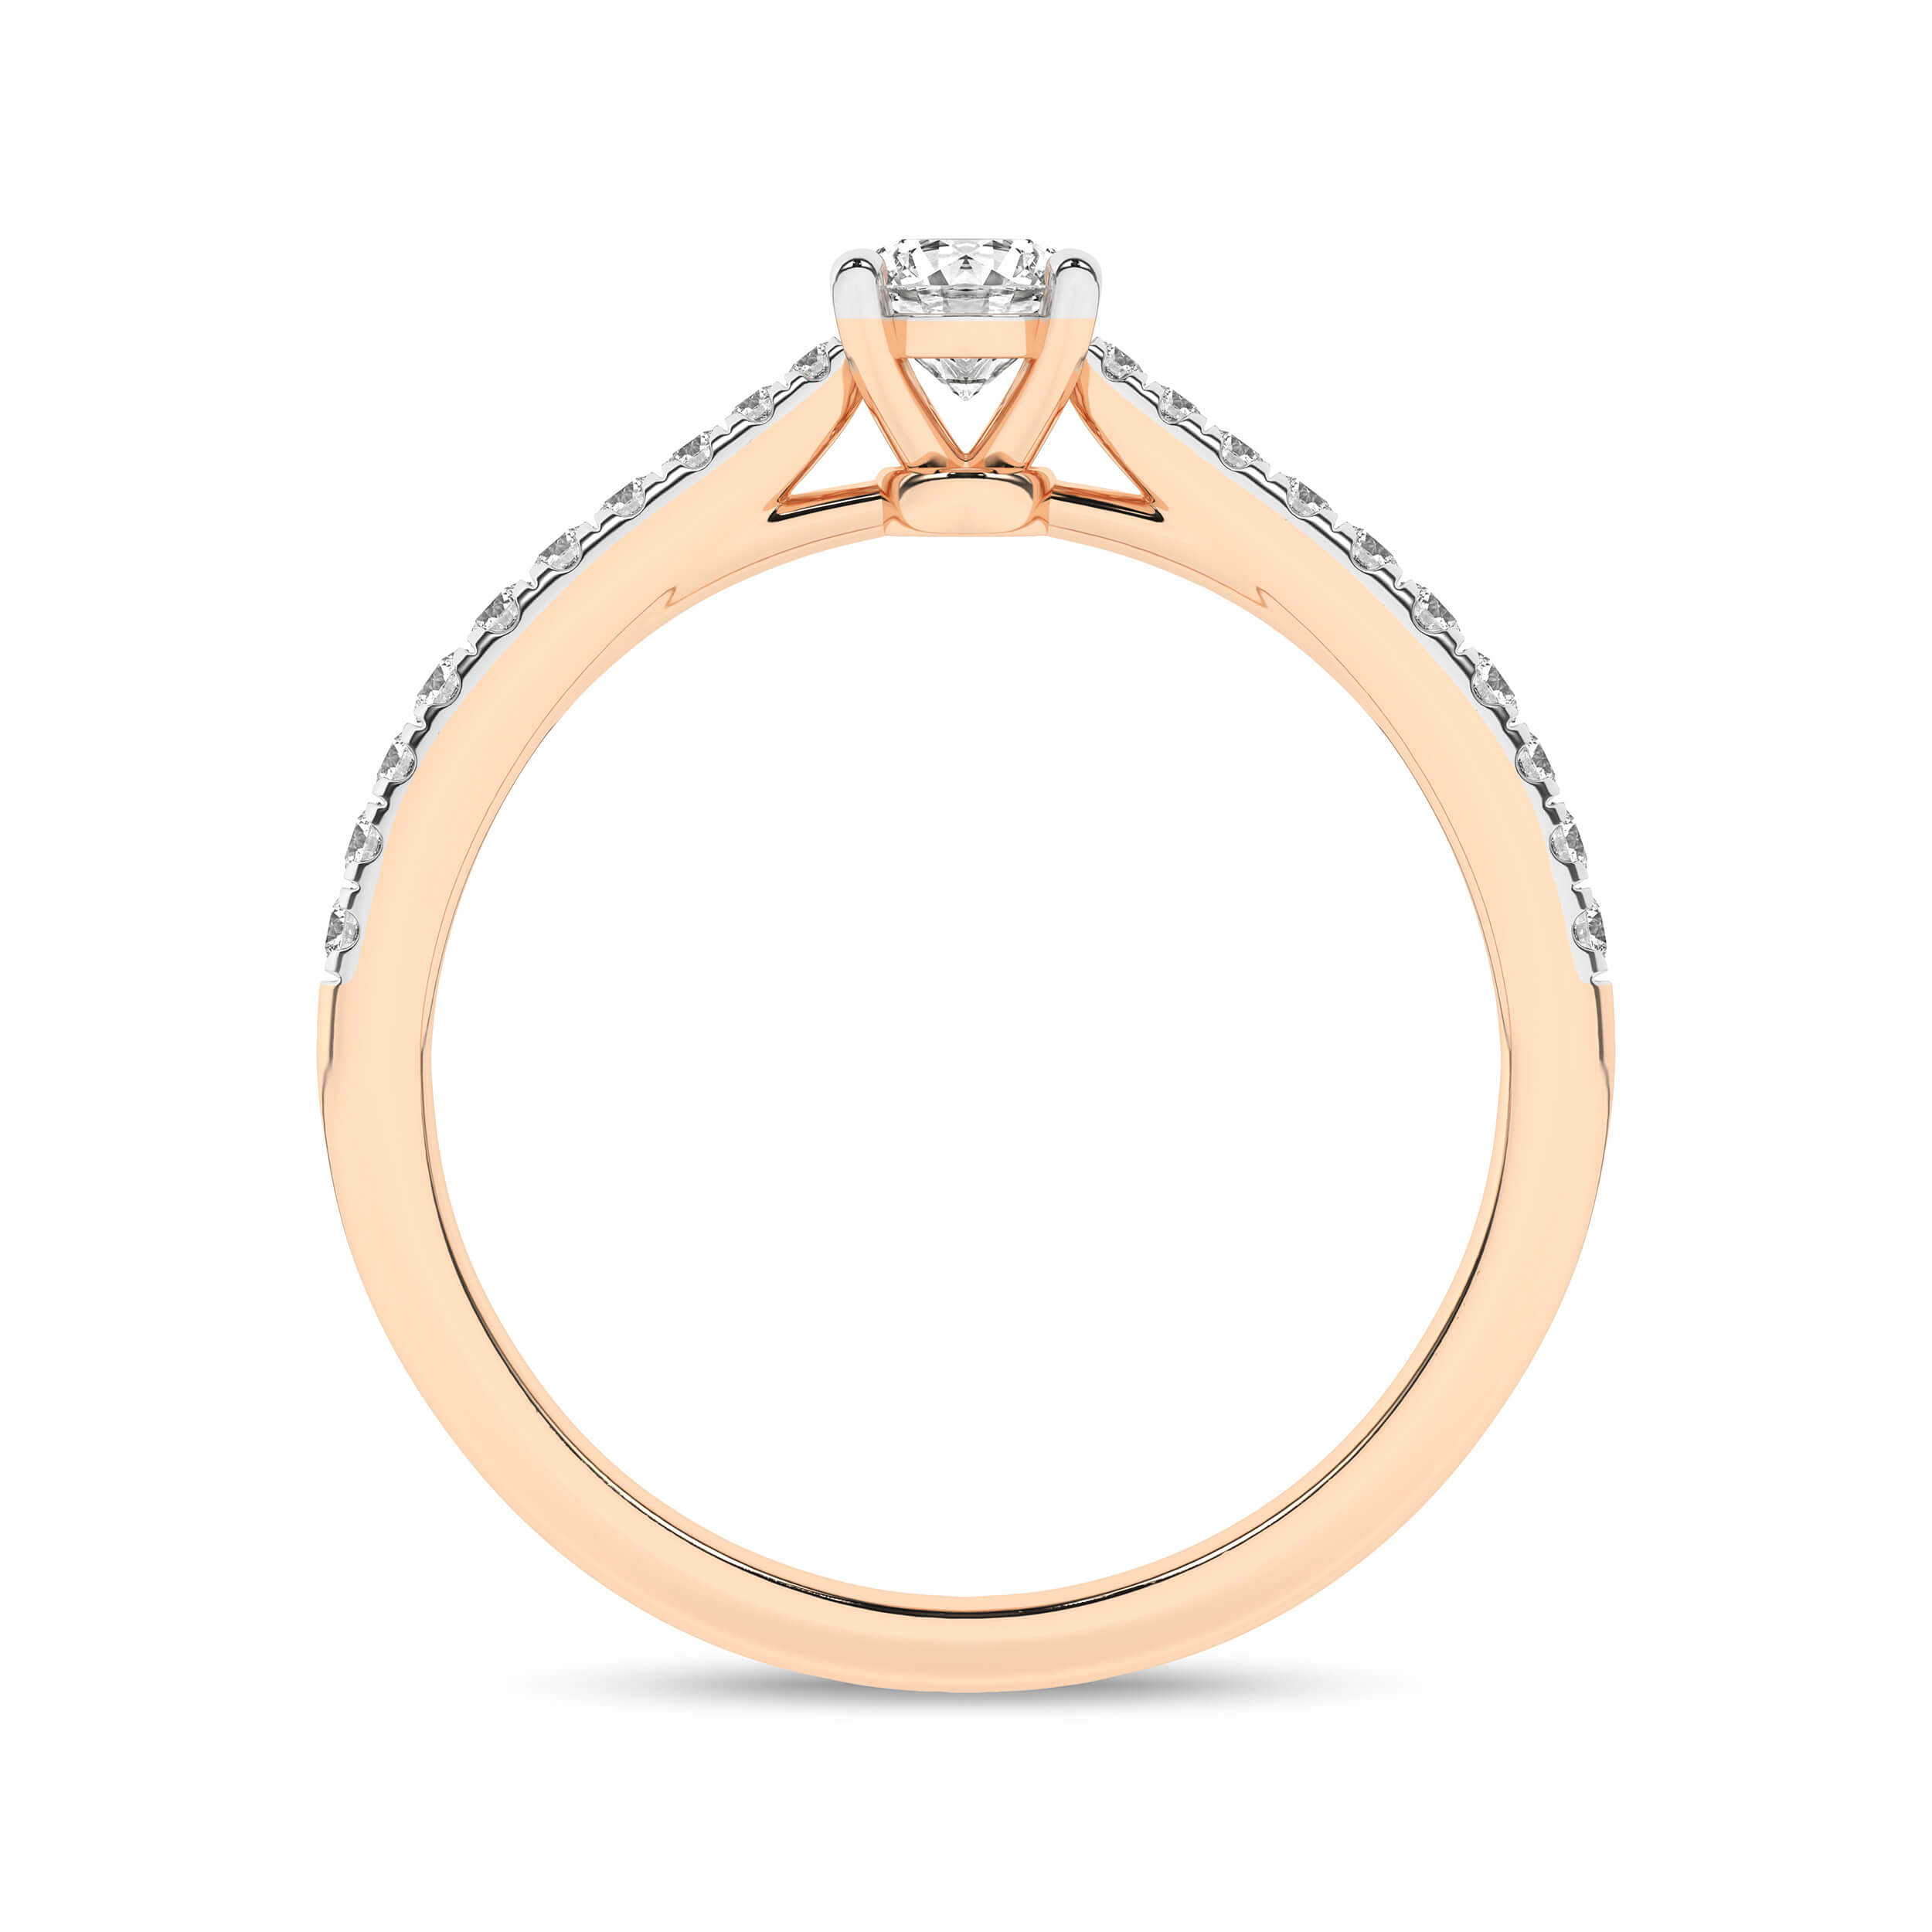 Inel de logodna din Aur Roz 14K cu Diamante 0.40Ct, articol RB21734EG, previzualizare foto 2